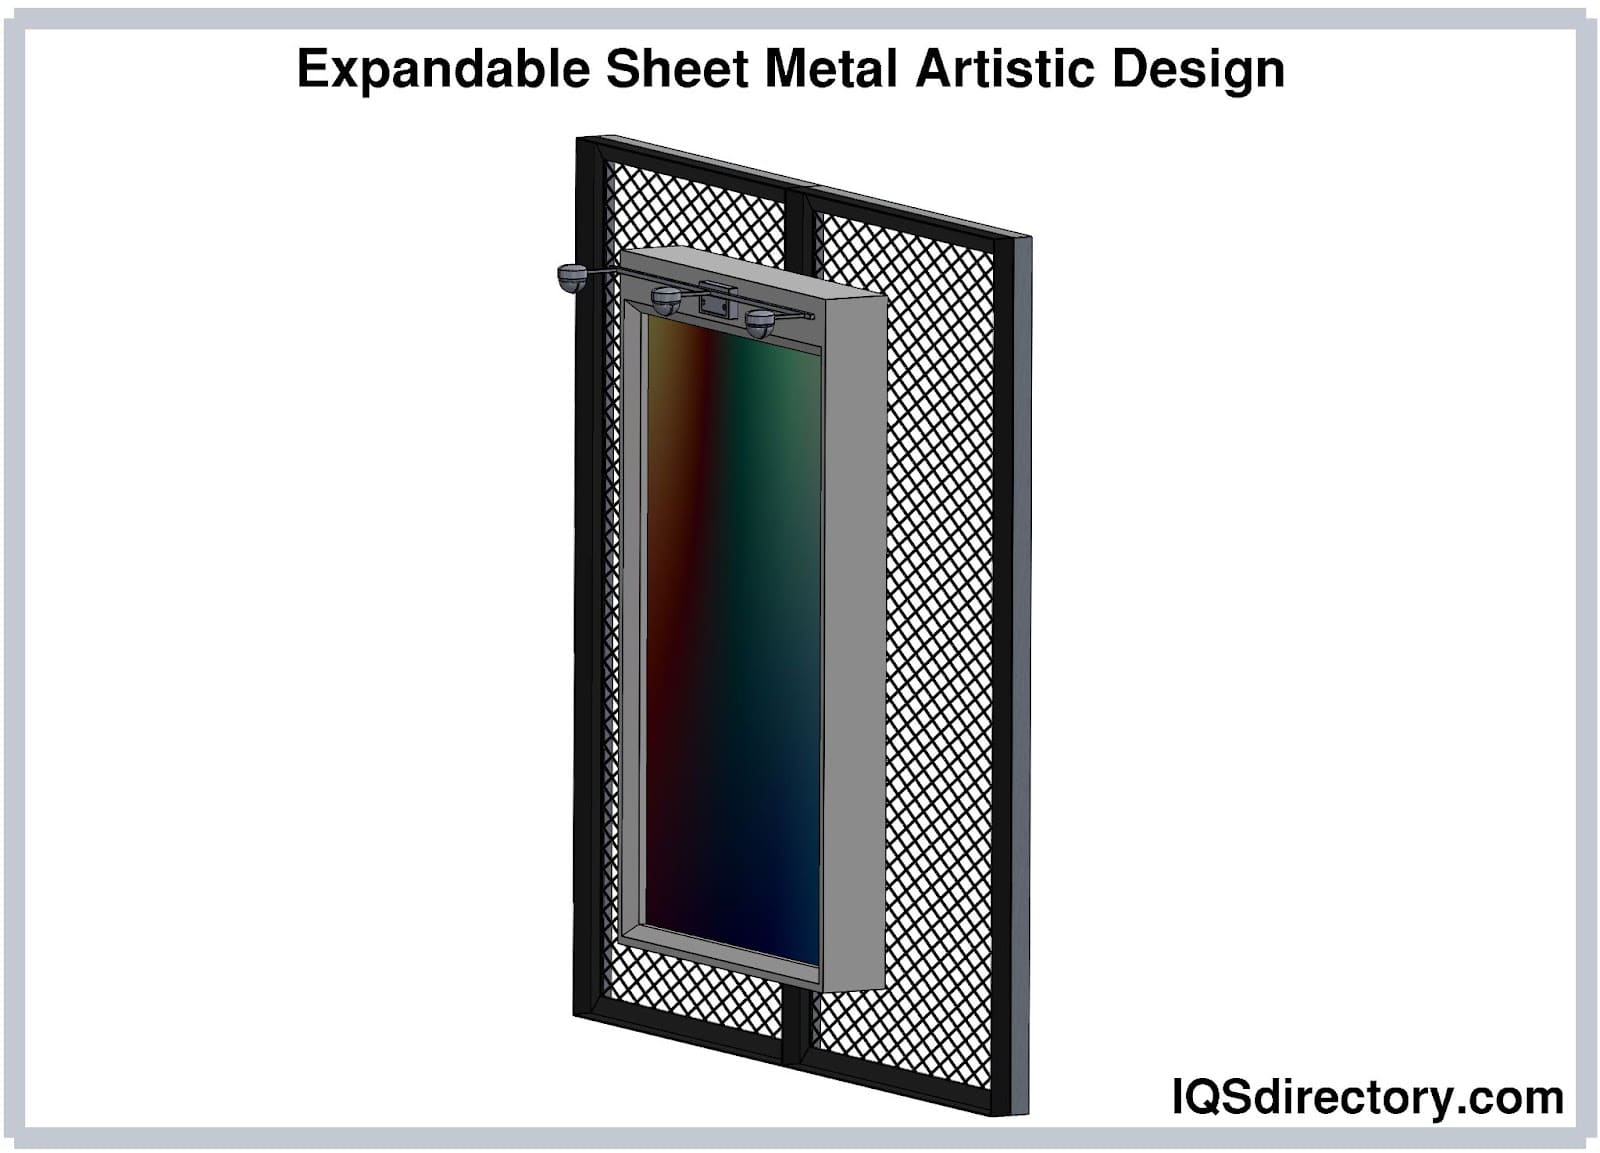 expanded sheet metal artistic design